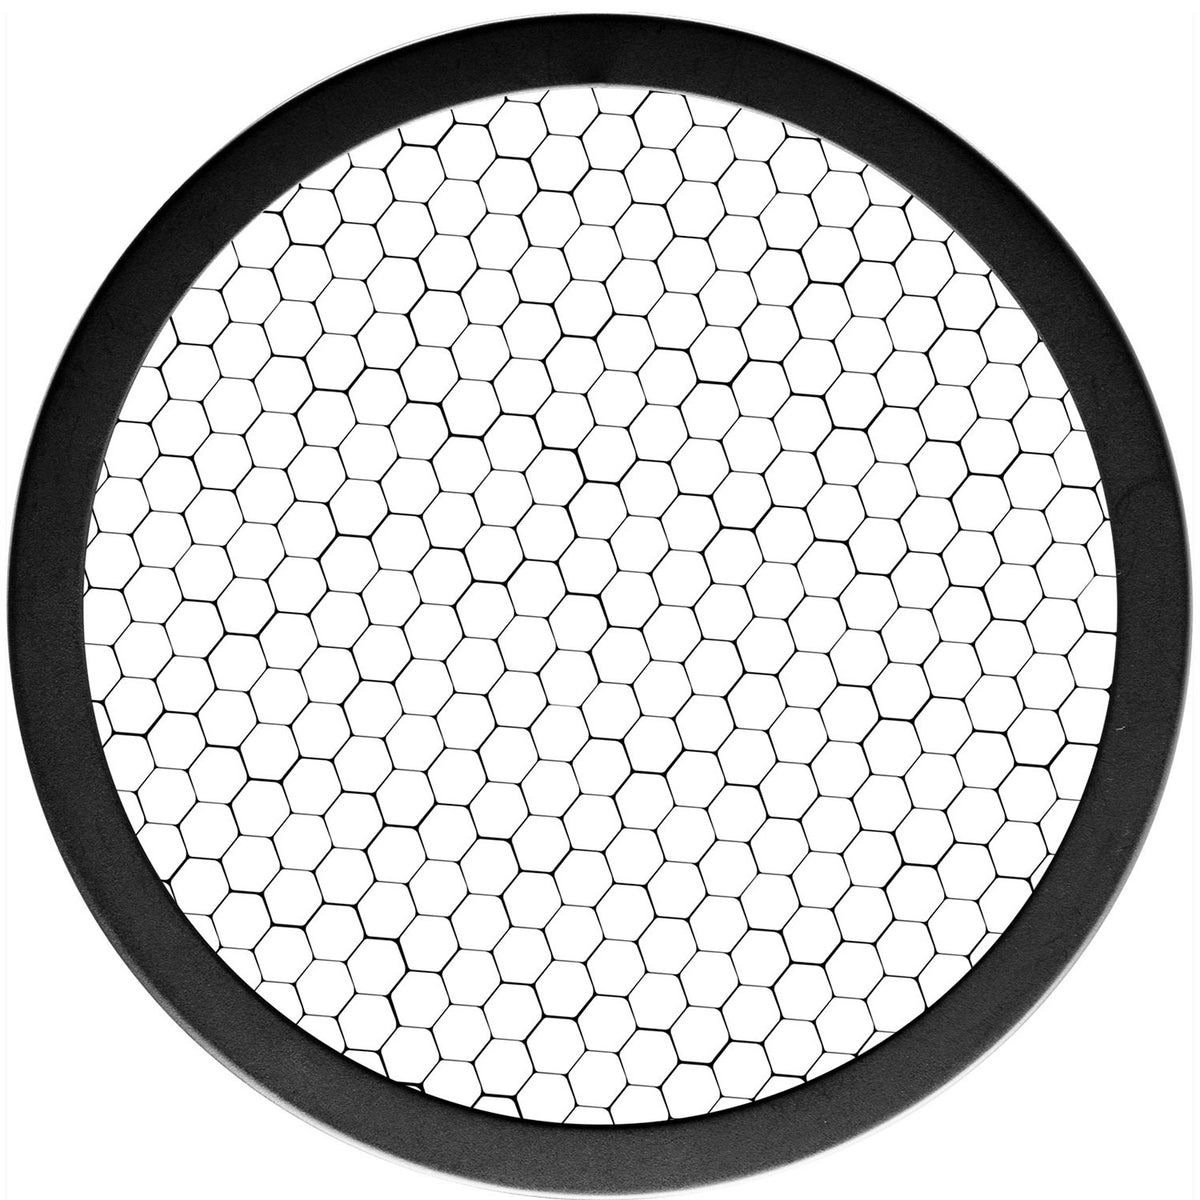 FJ400 30-Degree Honeycomb Grid for 55-Degree Magnetic Reflector